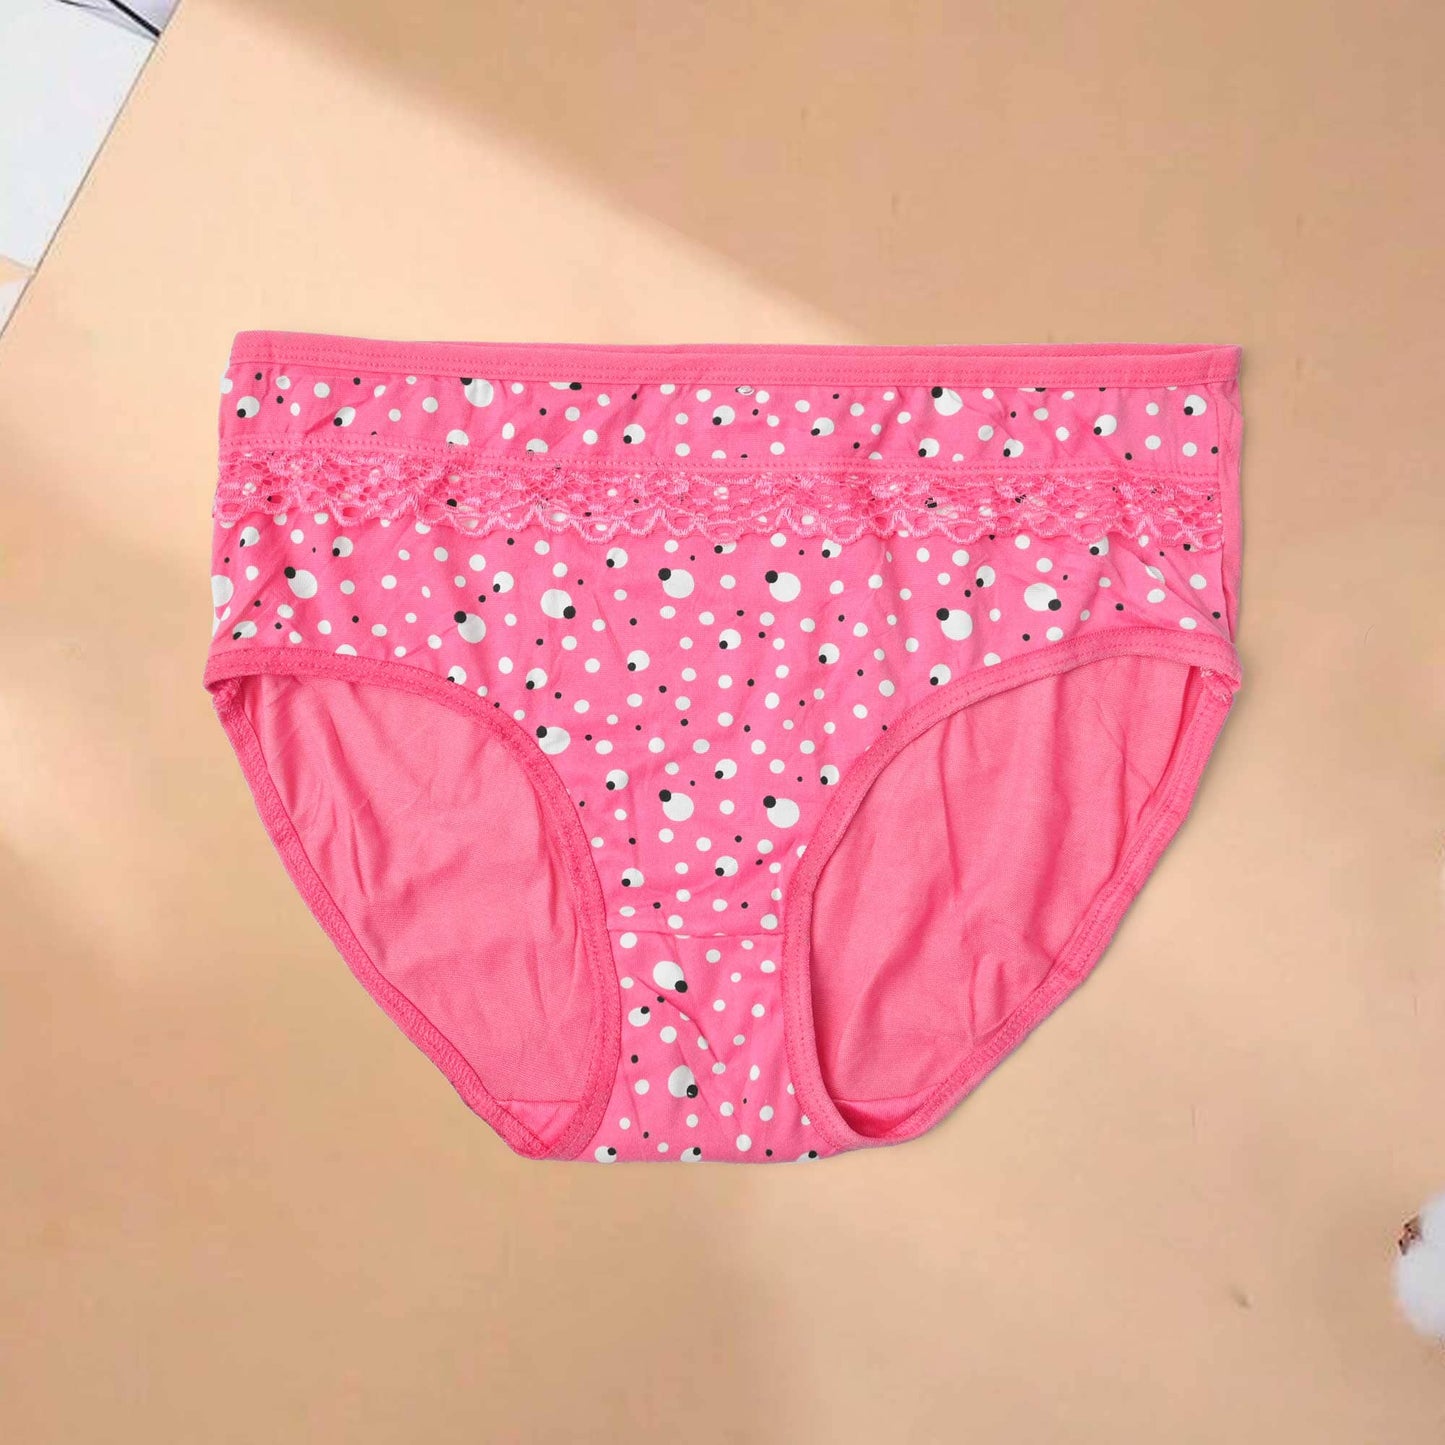 Yinidanya Women's Lace Design Polka Dots Printed Underwear Women's Lingerie RAM Magenta 28-34 